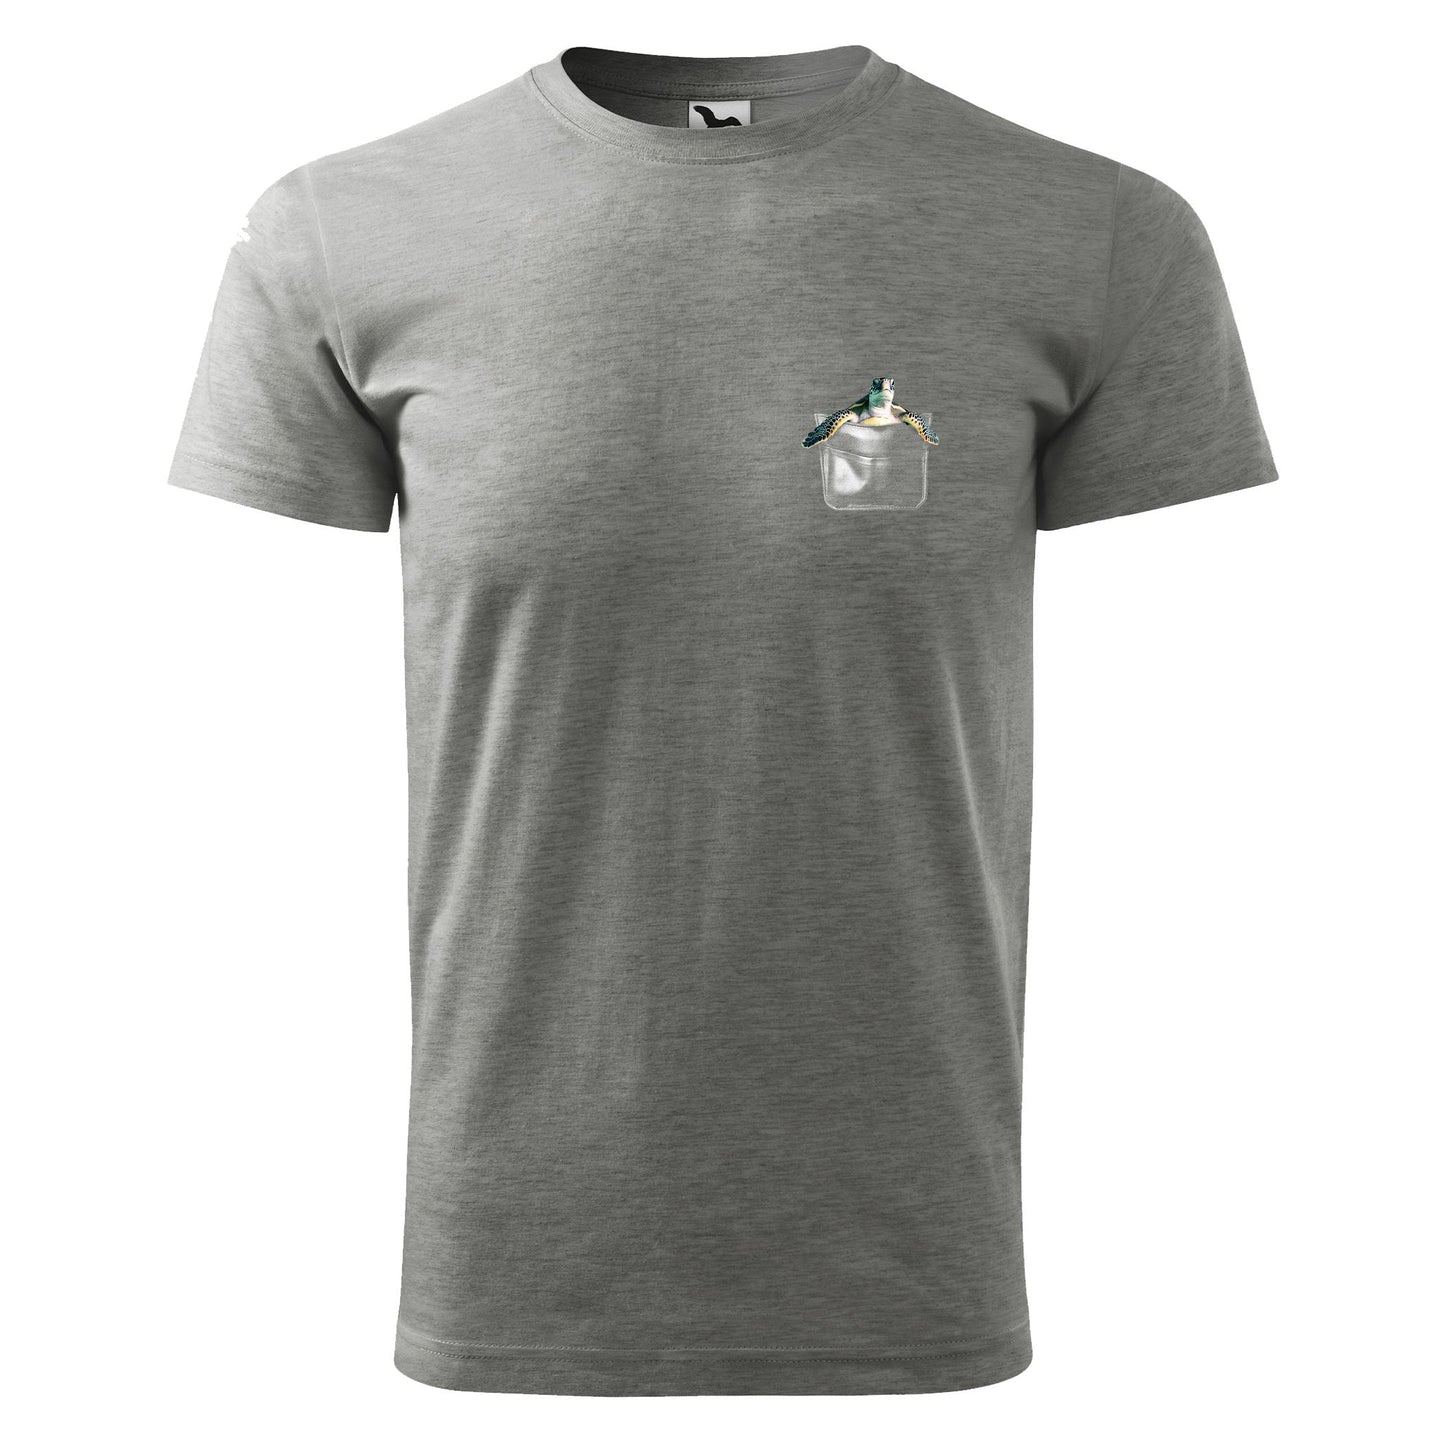 Turtle pocket t-shirt - rvdesignprint